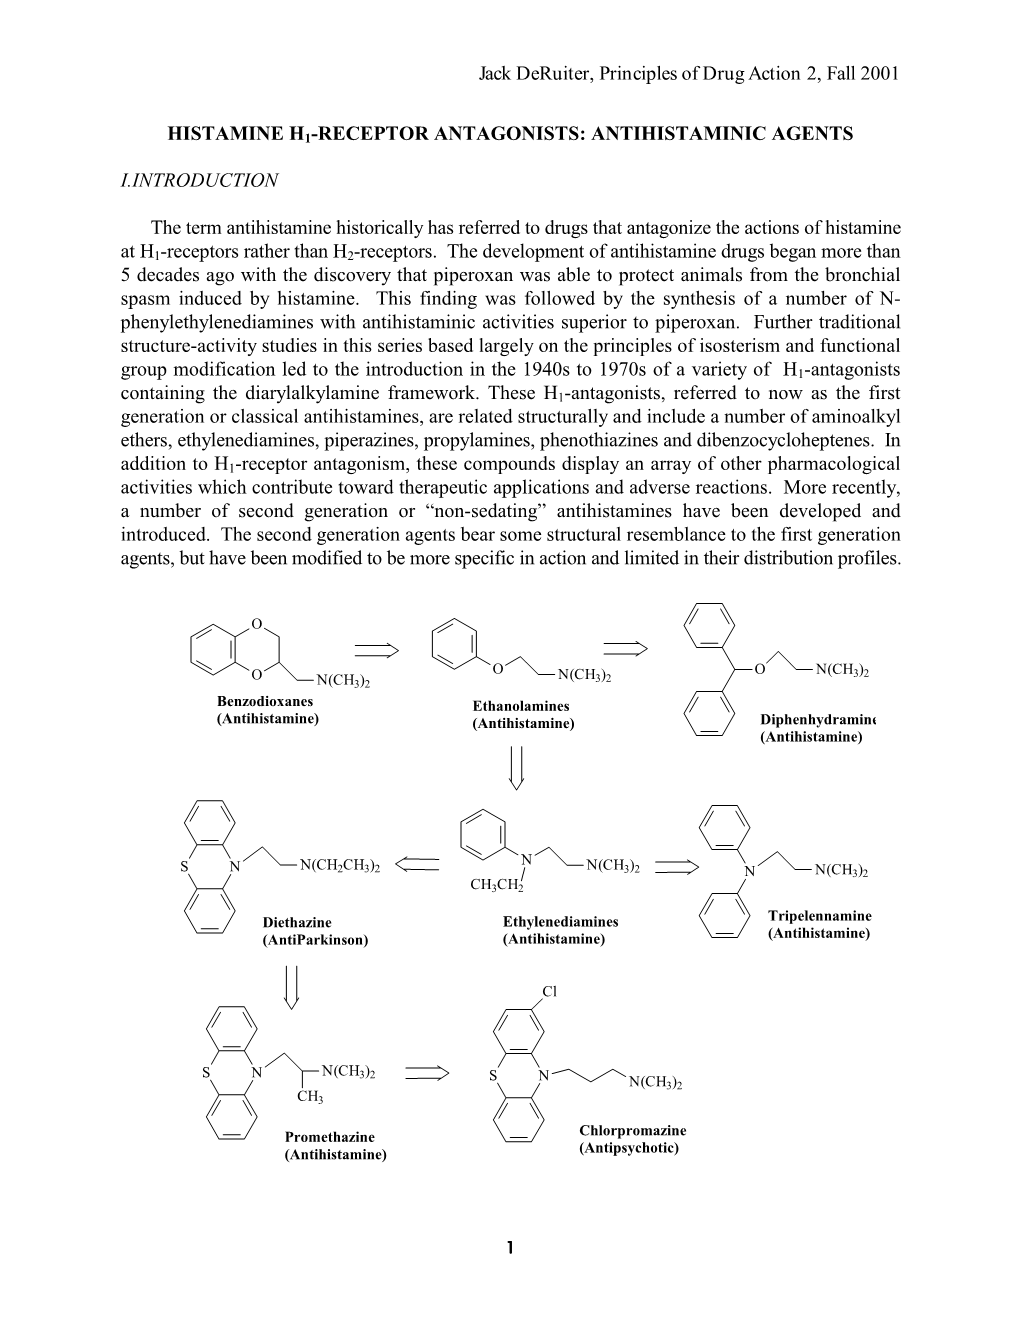 Histamine H1-Receptor Antagonists: Antihistaminic Agents